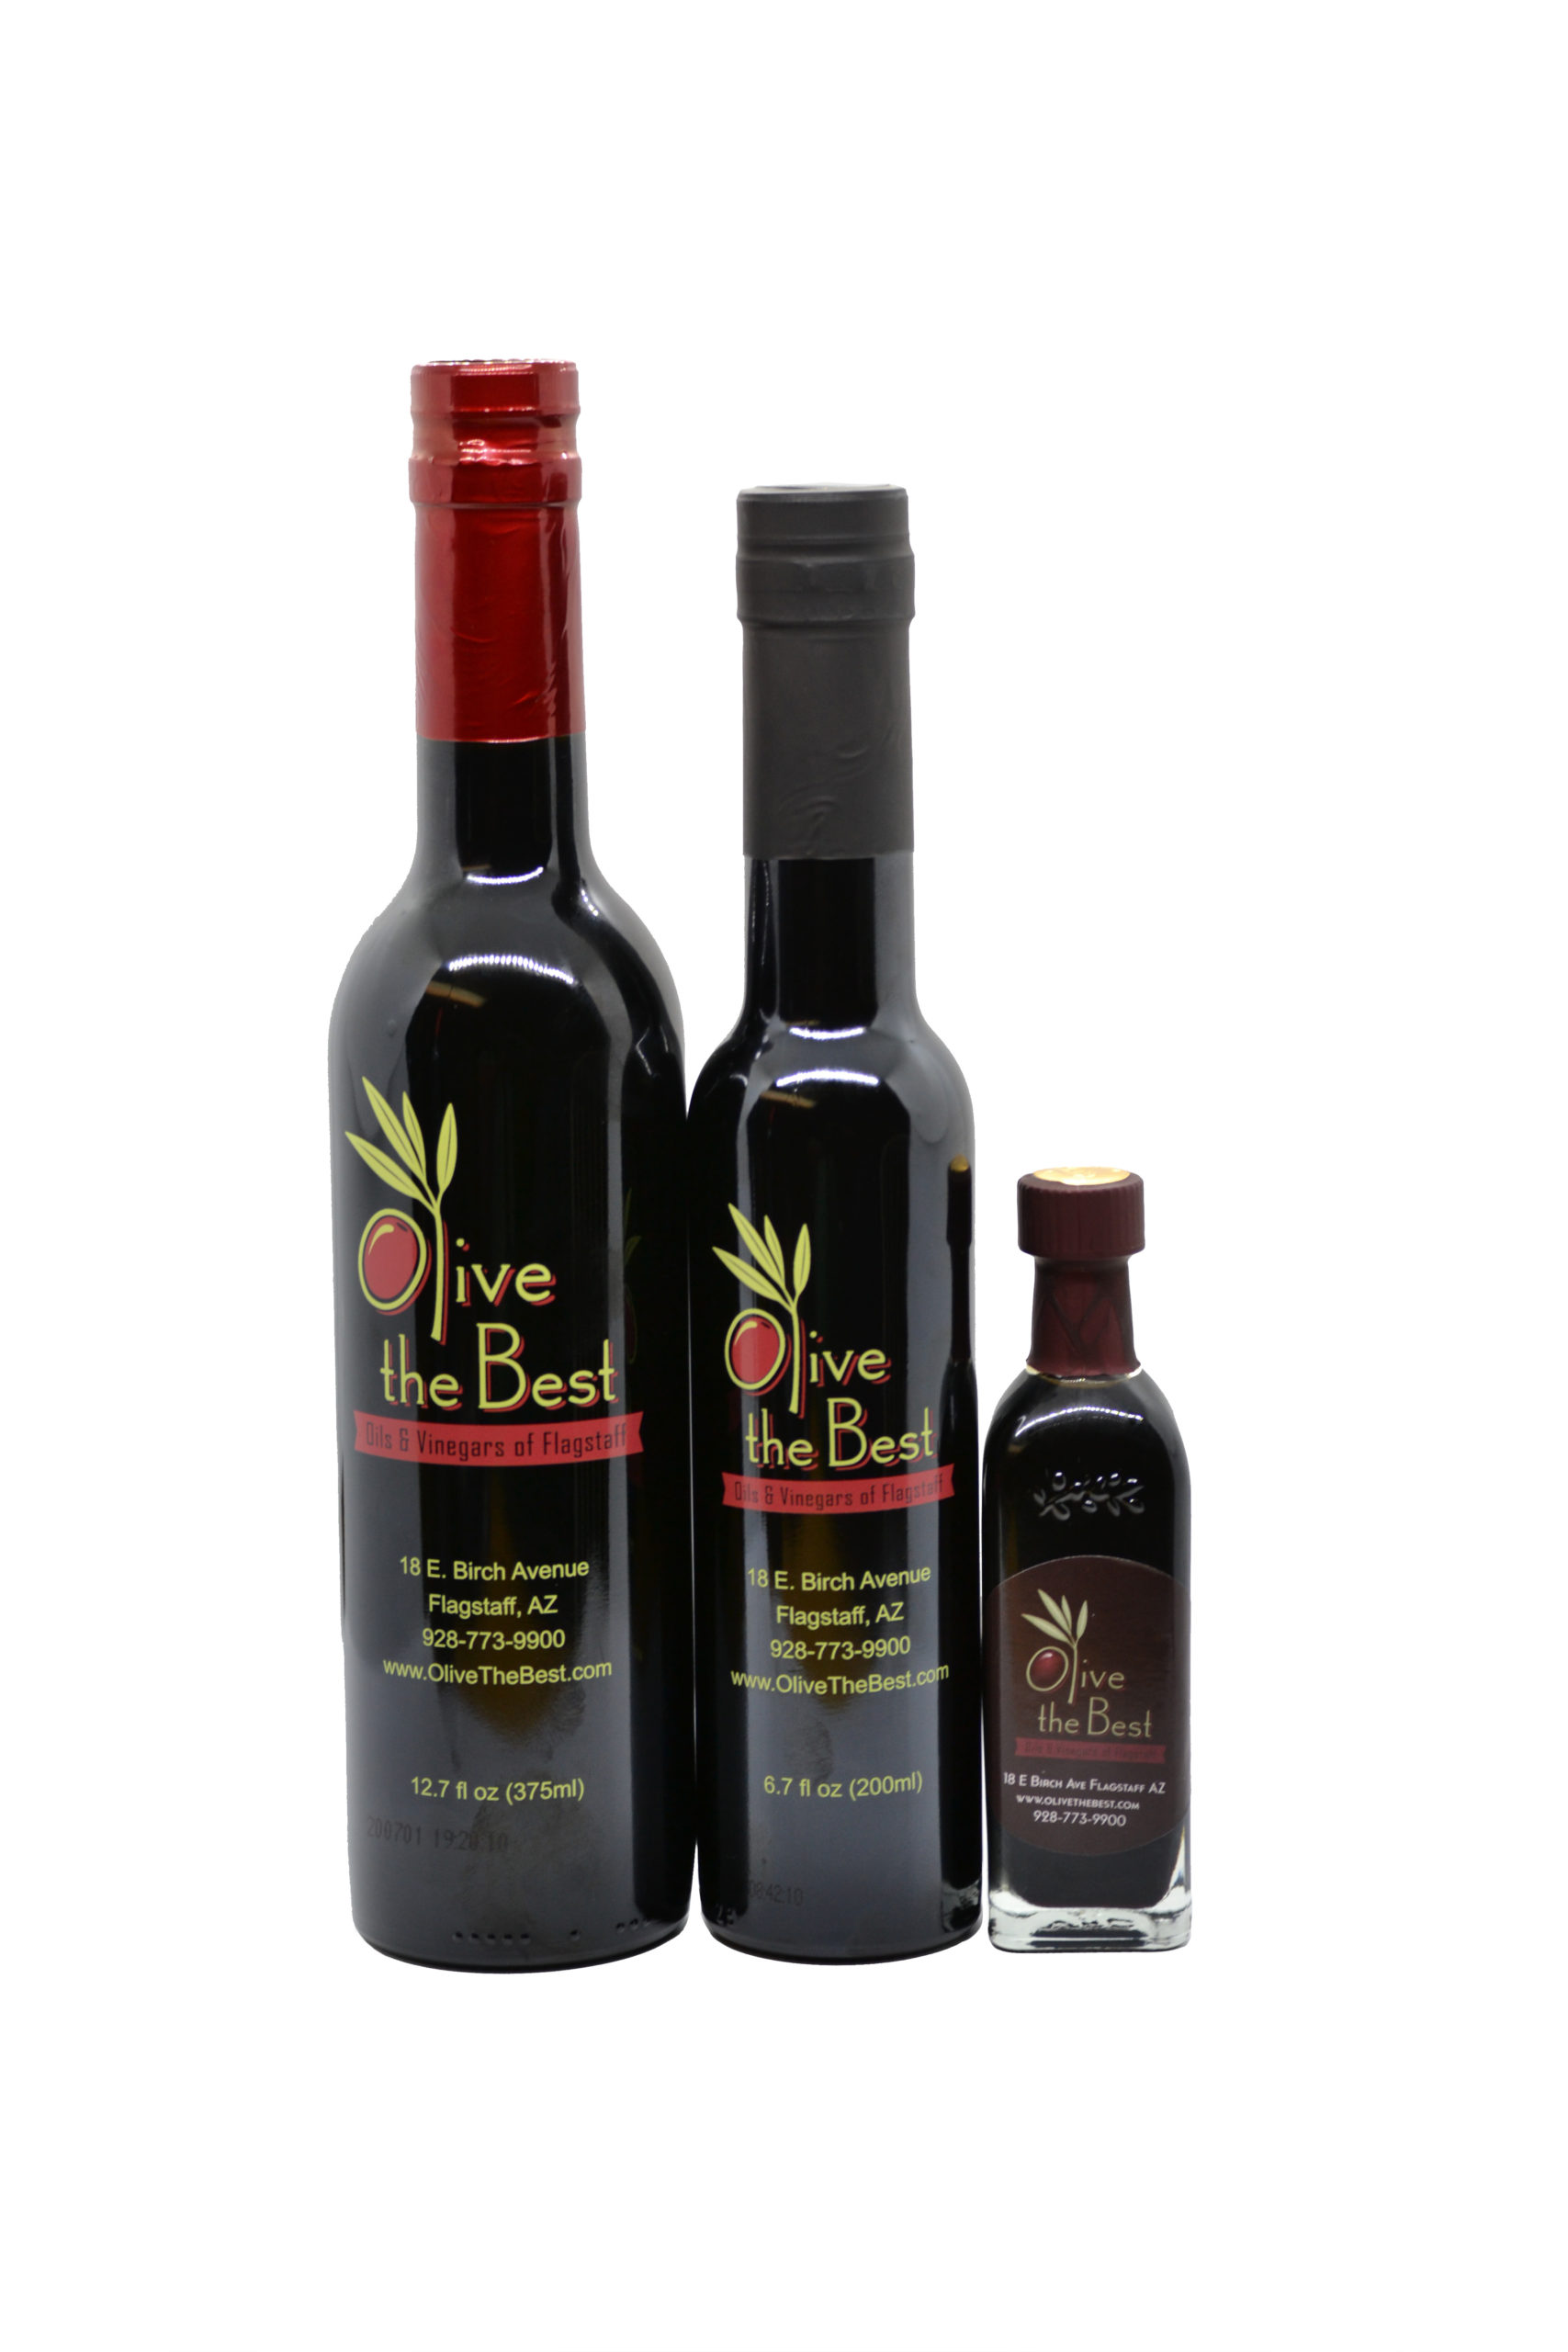 Clear Glass Bottles 12 oz - 375ml for Wine Beverages Drinks Oil